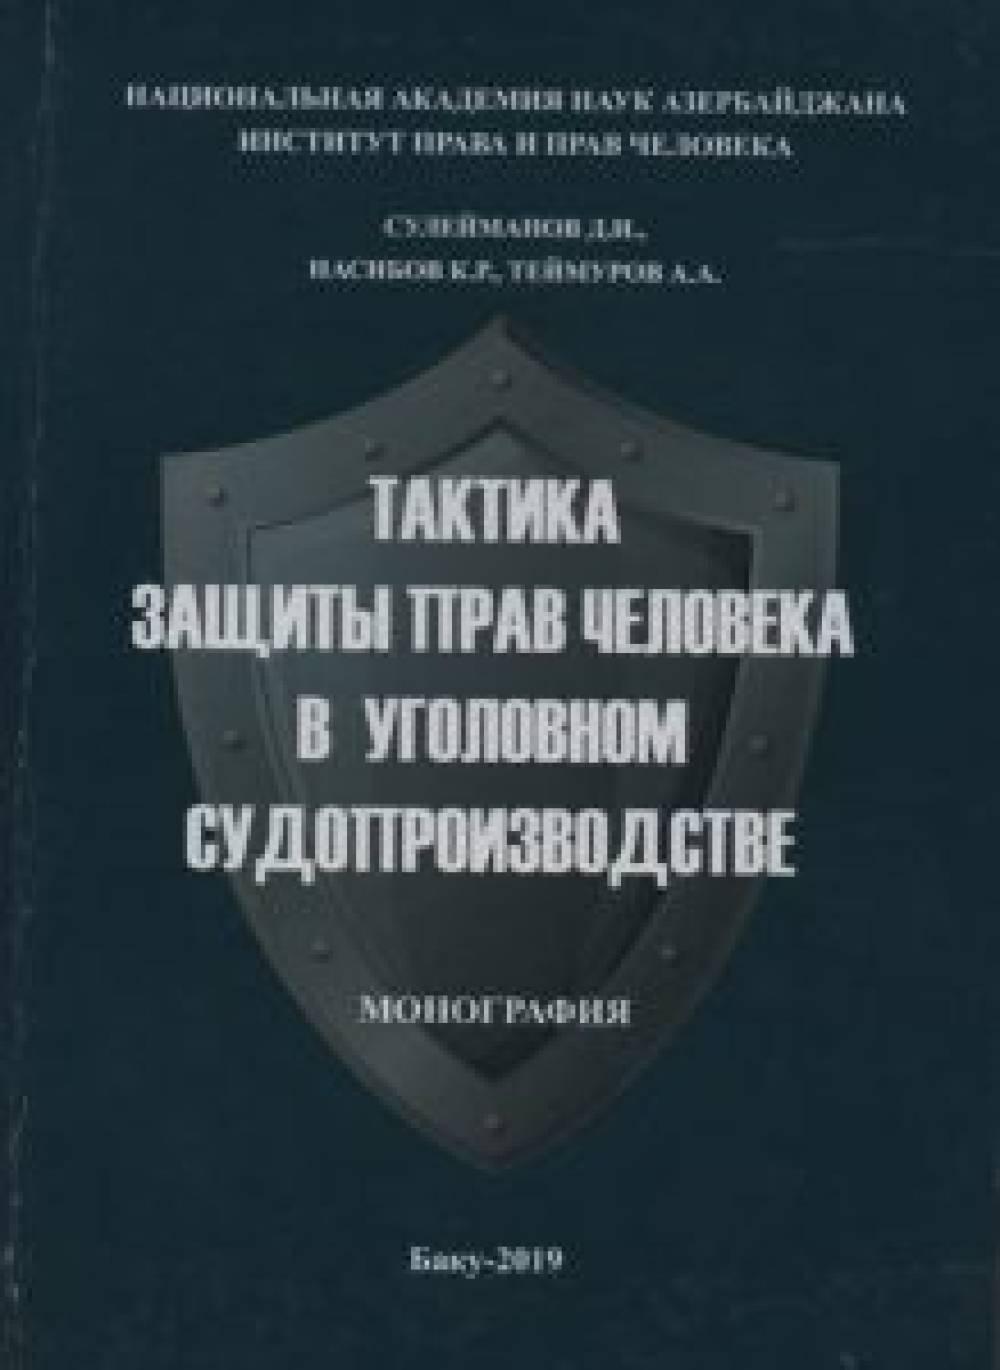 SULEYMANOV C.I; NASIBOV K.R: TEYMUROV A.A. HUMAN RIGHTS PROTECTION TACTICS IN CRIMINAL LEGAL PROCEEDINGS (MONOGRAPHY)